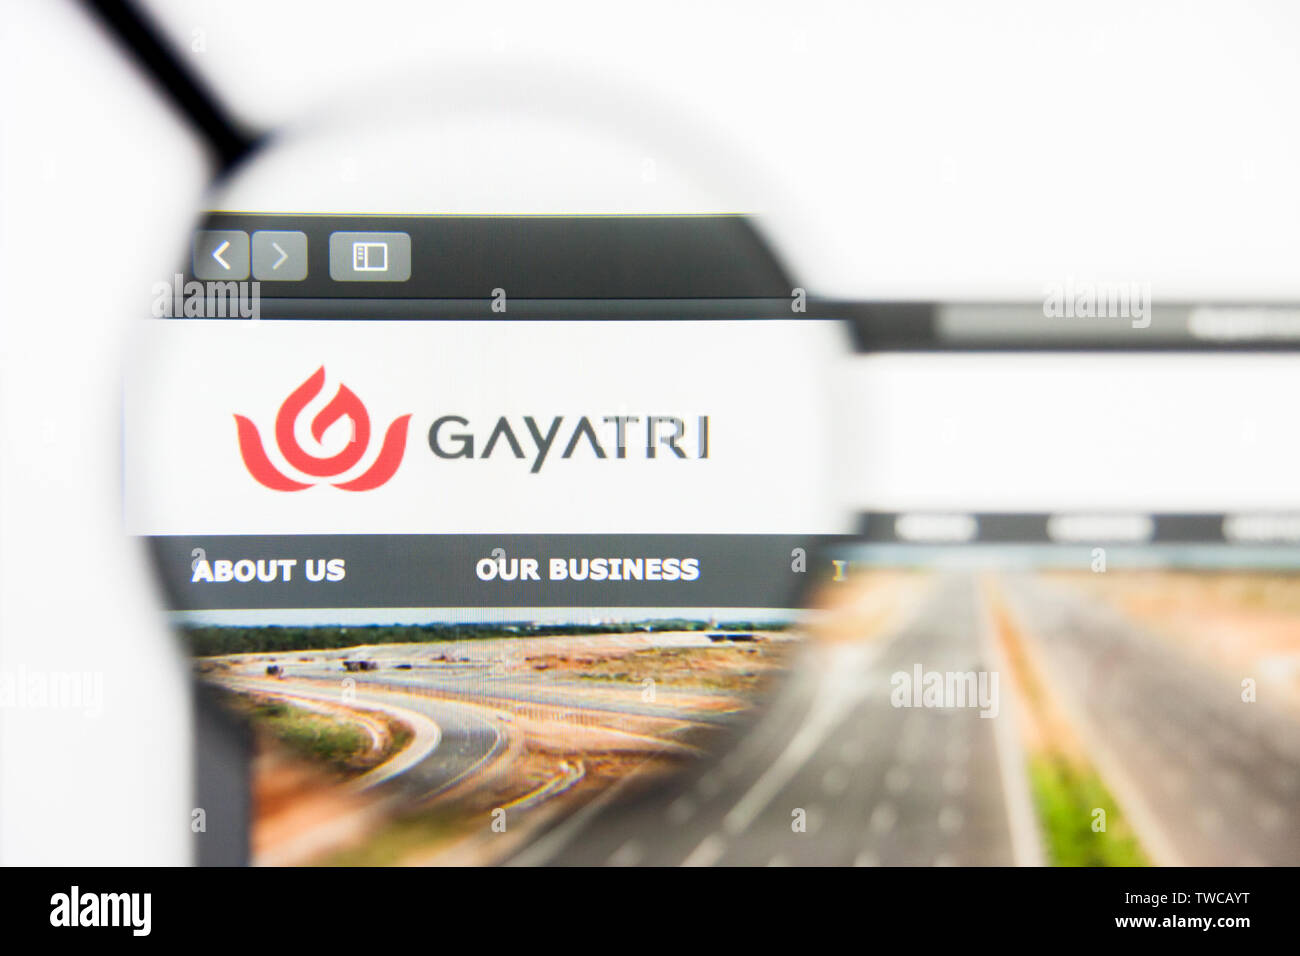 New York, New York State, USA - 19. Juni 2019: Illustrative Editorial der Gayatri website Homepage Projekte. Gayatri Projekte Logo auf dem Bildschirm sichtbar. Stockfoto